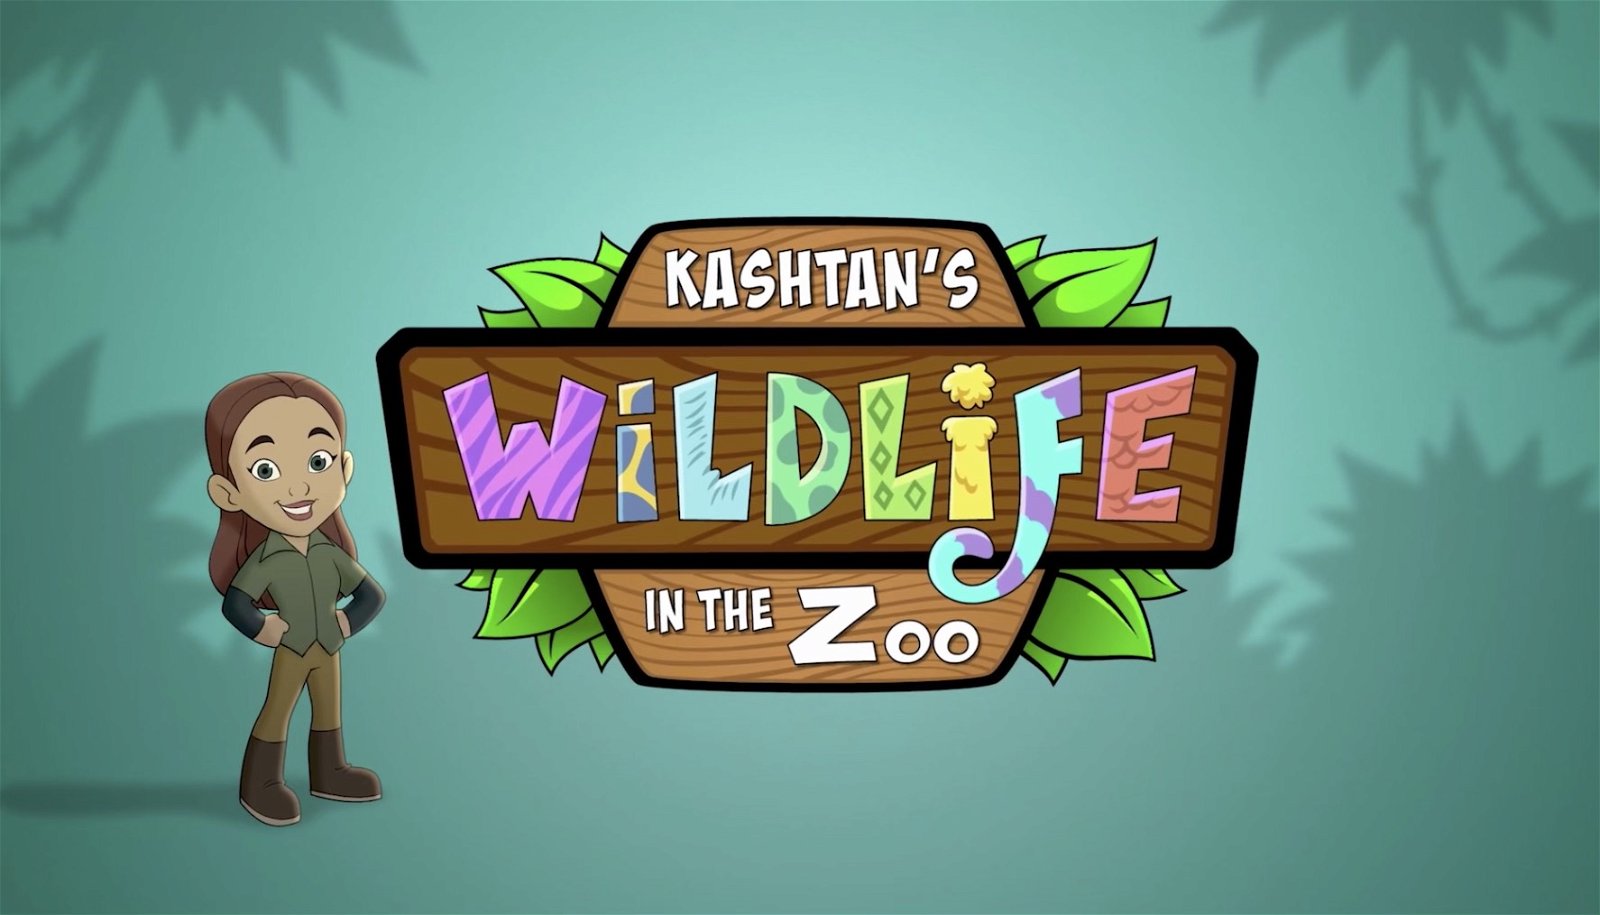 Kashtan’s Wildlife in the Zoo